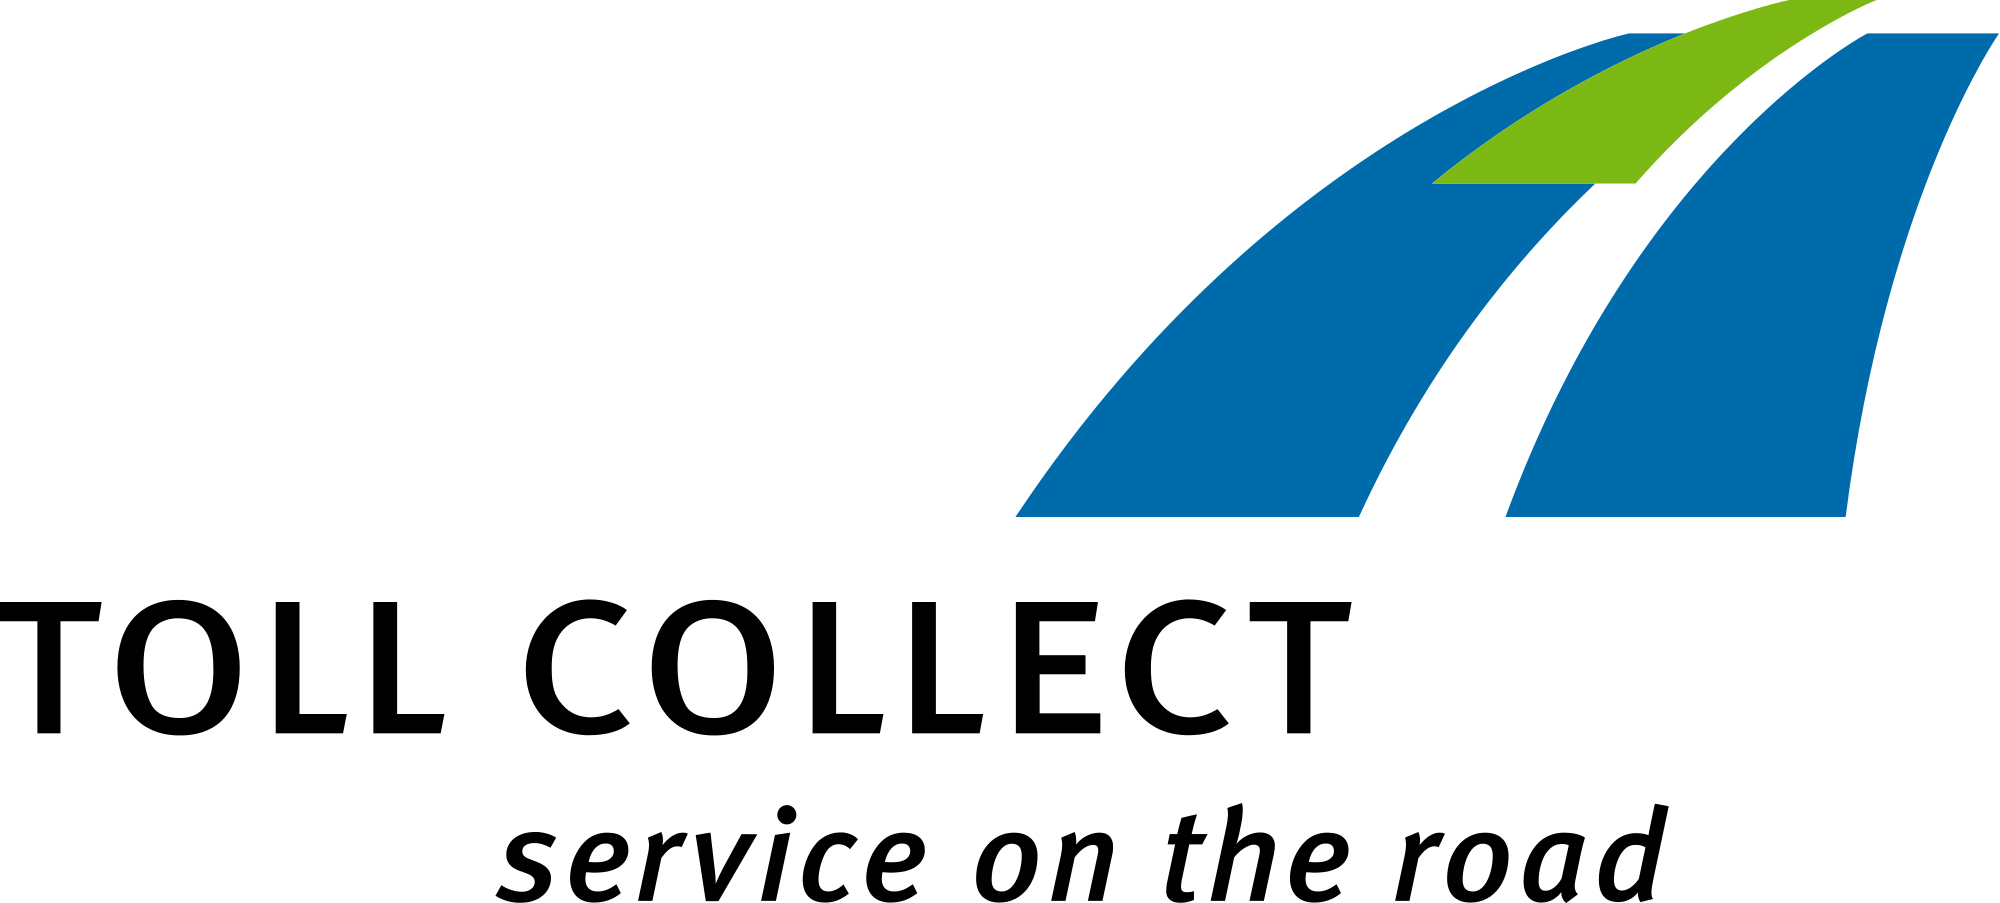 Tollcollect logo